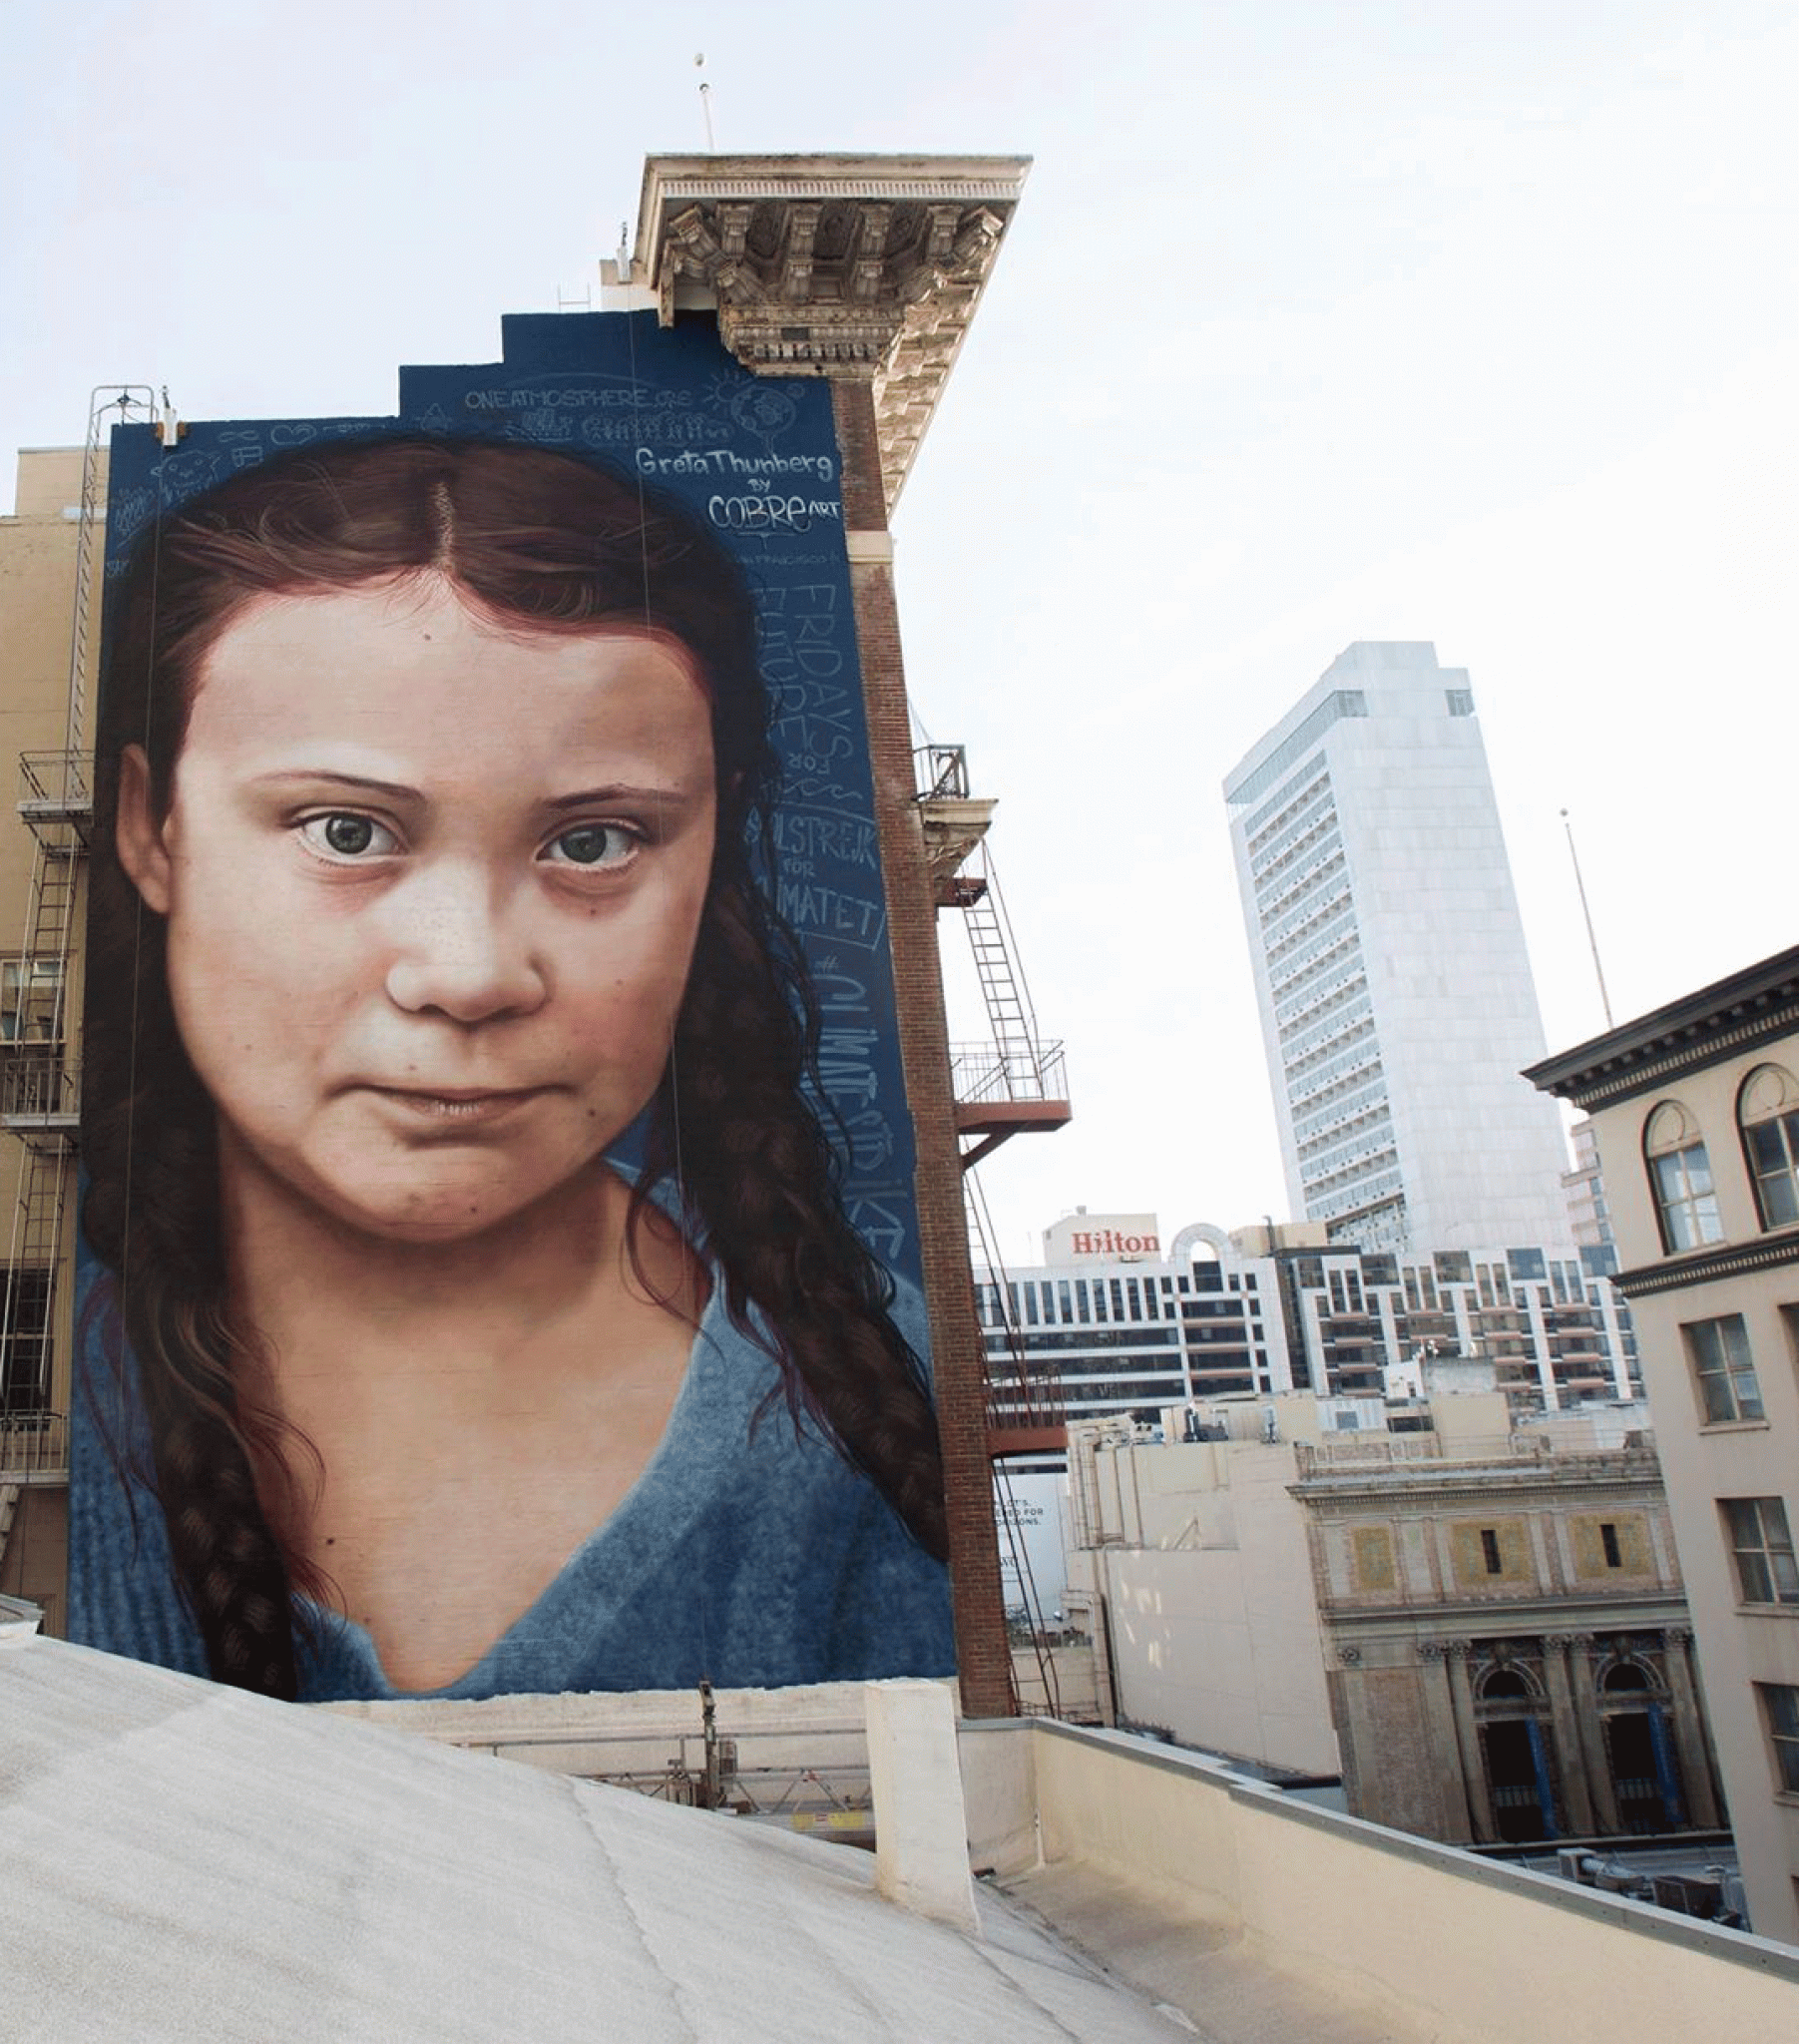 Greta Thunberg Mural by Cobre